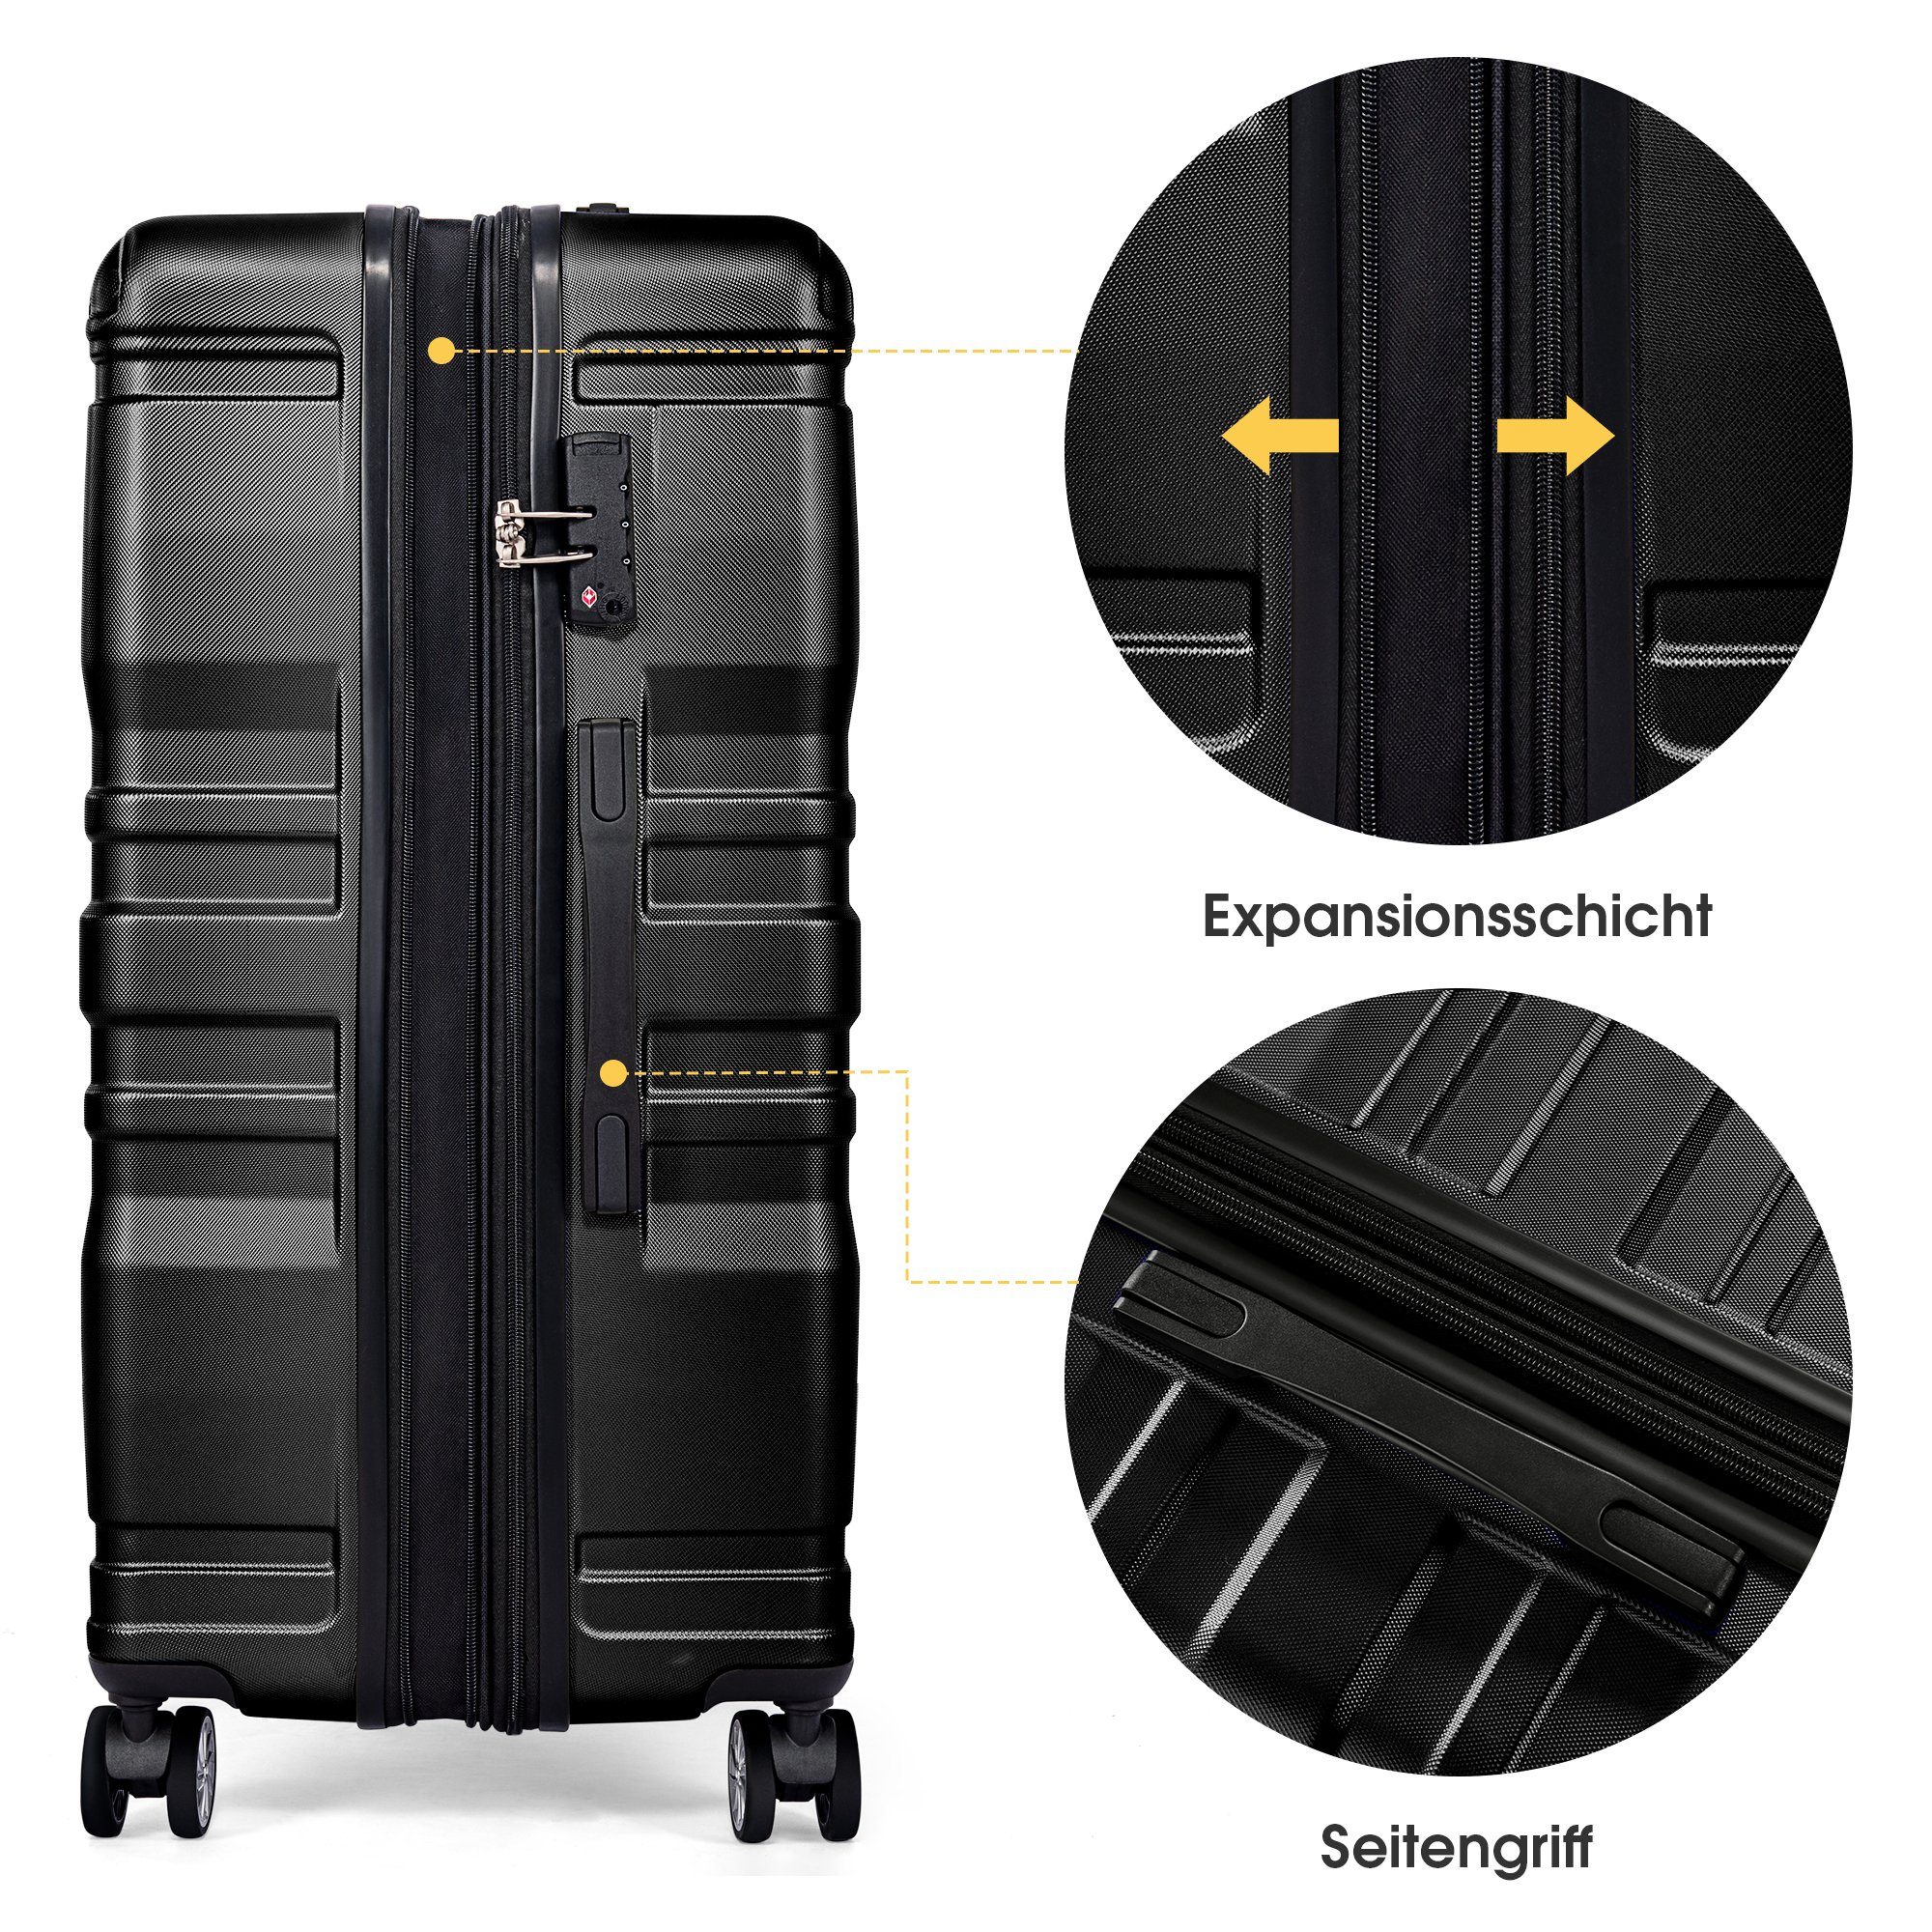 Ulife Kofferset schwarz, Hartschalen-Trolley, Zahlenschloss, 360° Aufgabegepäck, verstellbarer Rollen, (1 Rollen, 4 tlg), TSA Griff